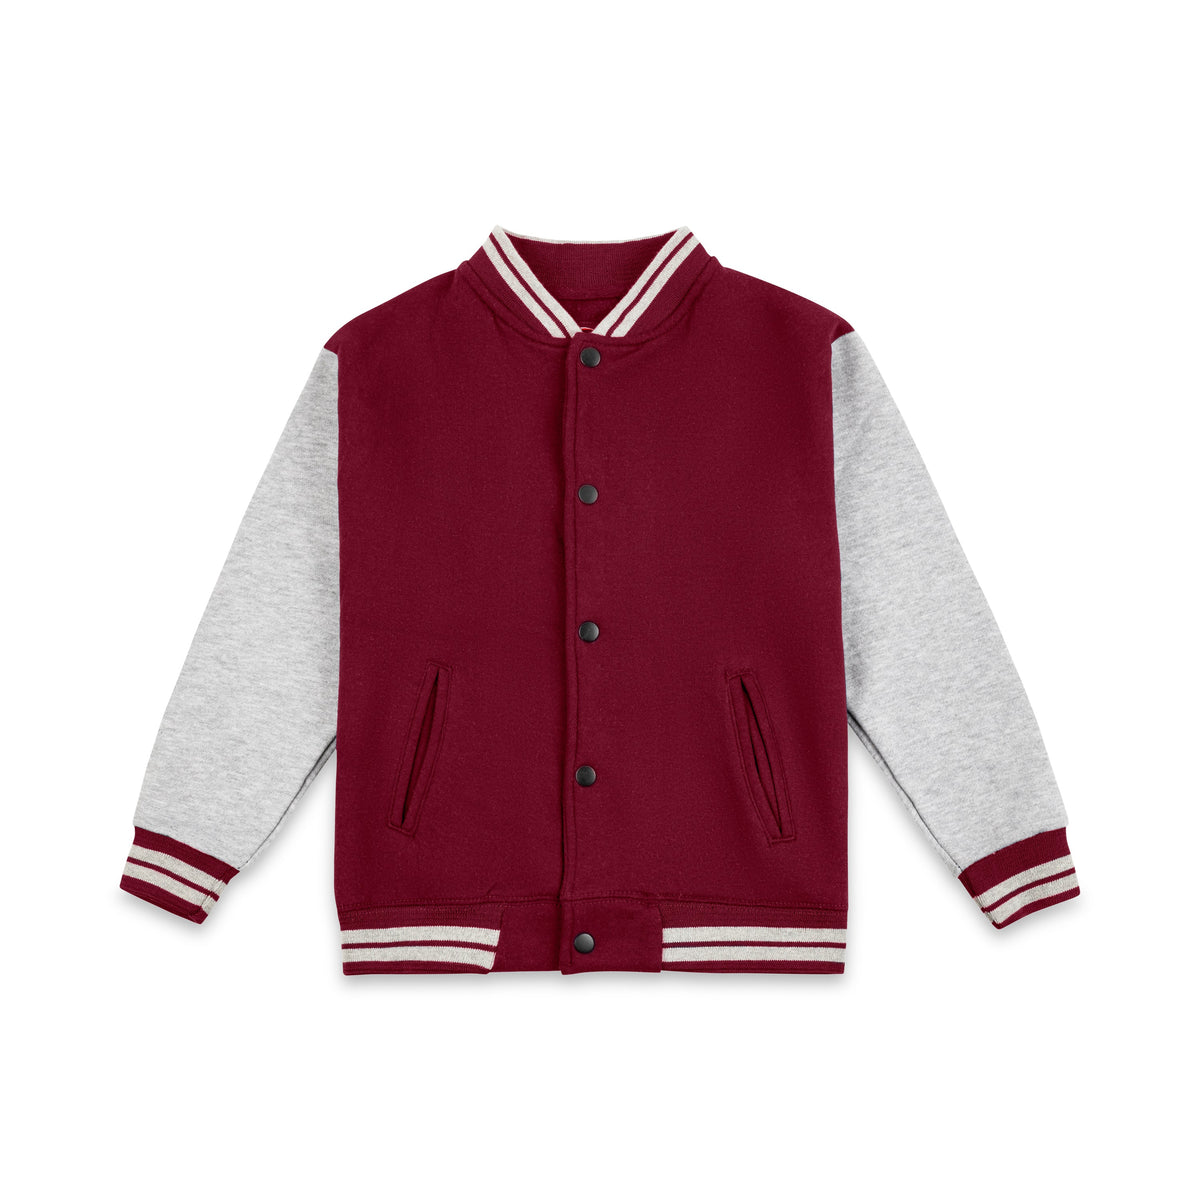 Best Youth's Varsity Jacket Buy Online– Wholesale Bulk School Uniforms